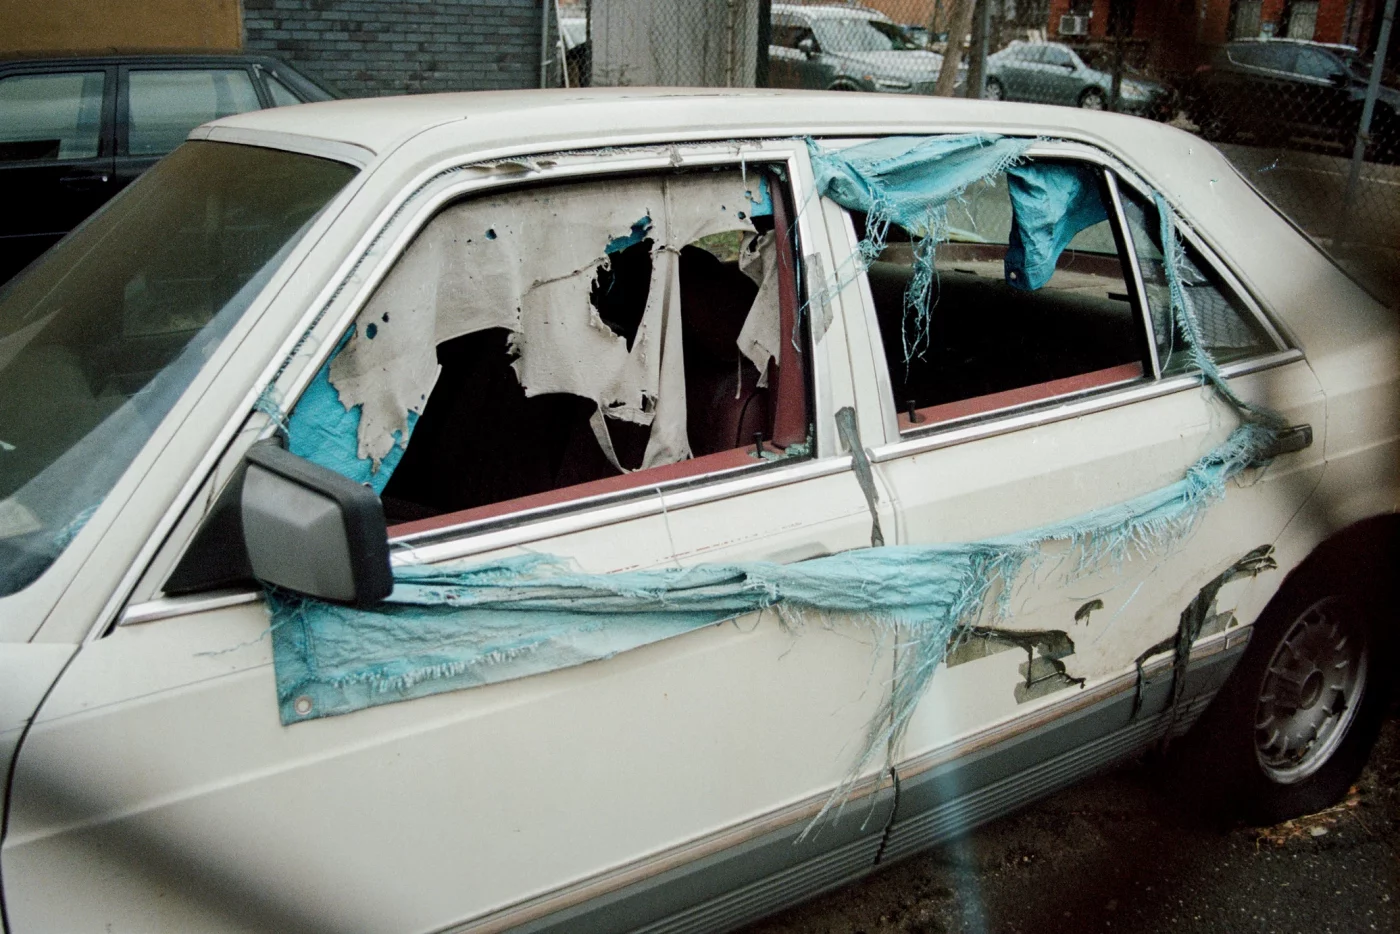 Helena Goñi. <i>Abandoned car</i>, from <i>Great expectations</i> series, 2018. Courtesy of the artist. @helena_goni